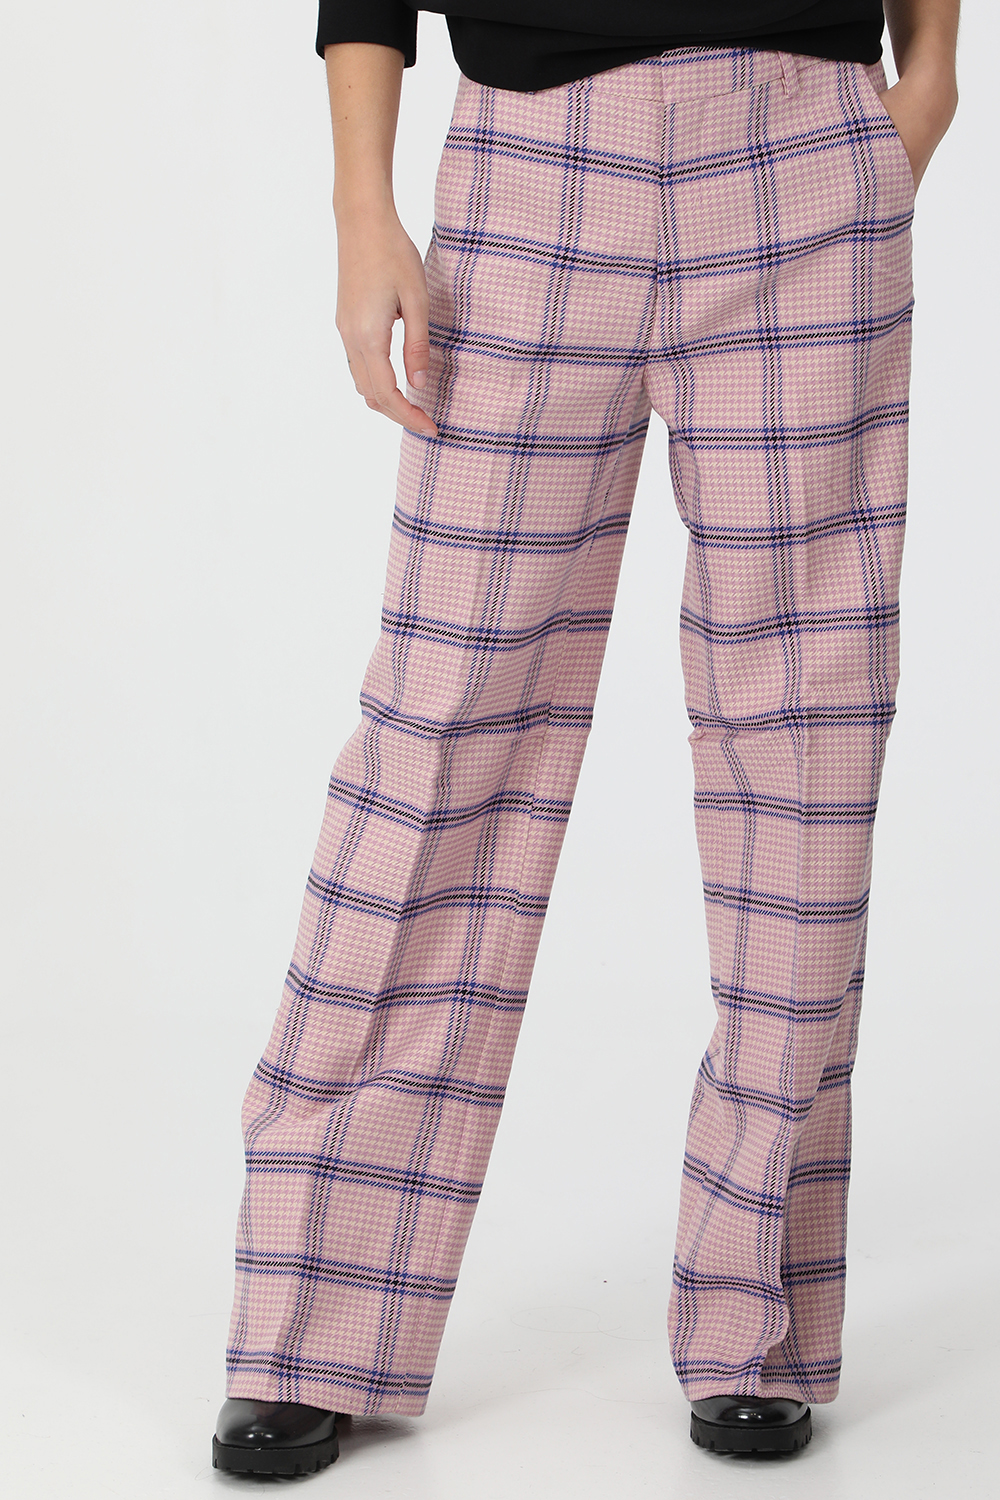 SCOTCH & SODA – Γυναικεία παντελόνα SCOTCH & SODA Edie tailored wide leg ροζ εκρού μπλε 1821103.0-0106